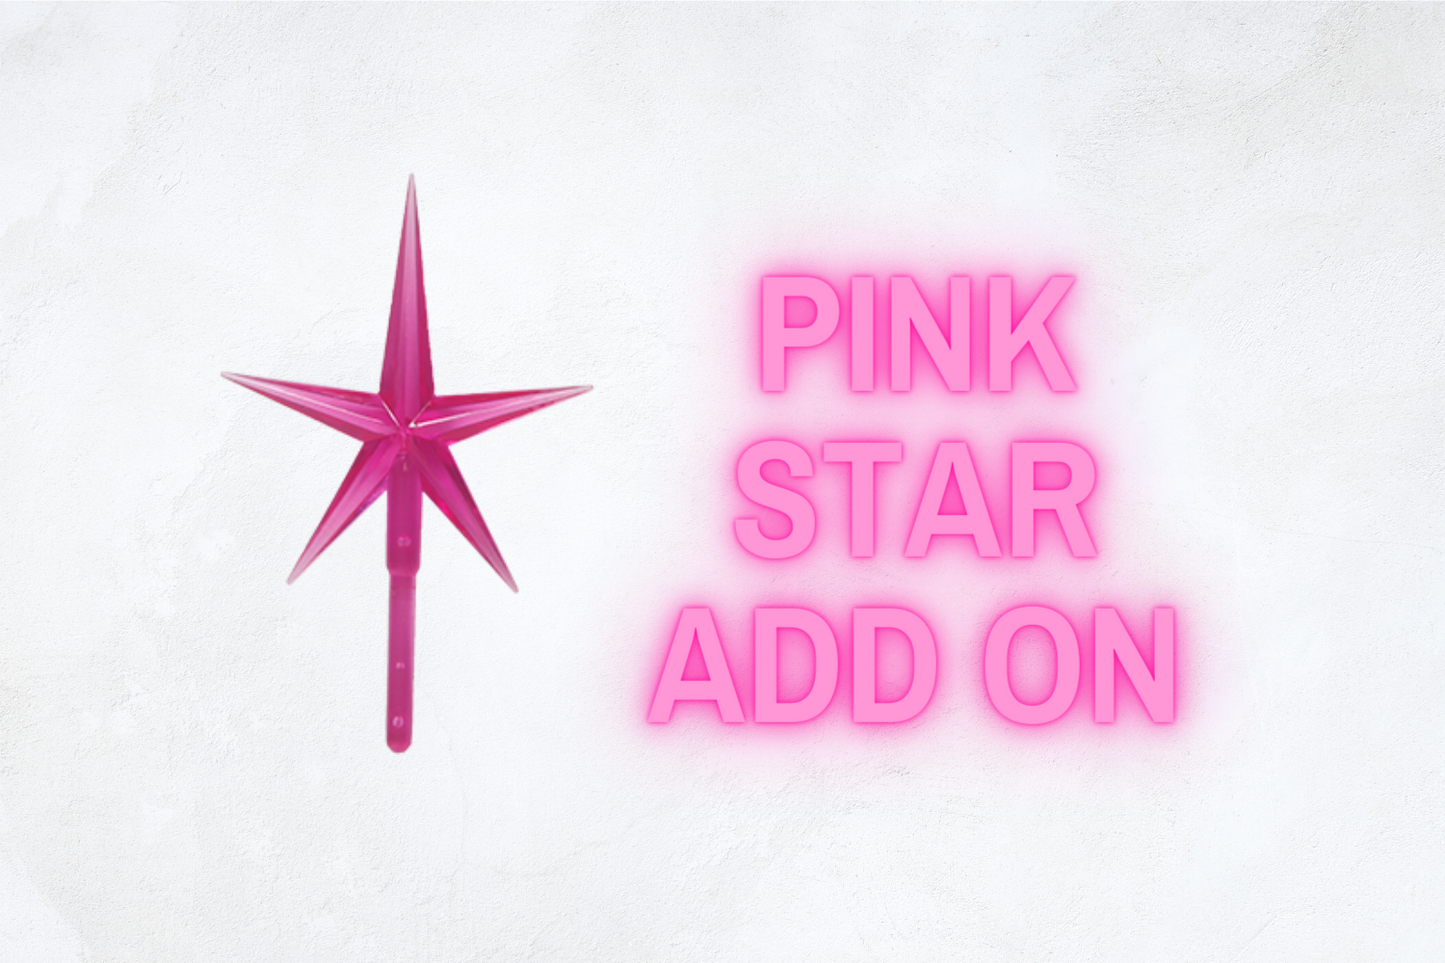 Pink Star + Valentine's Lights